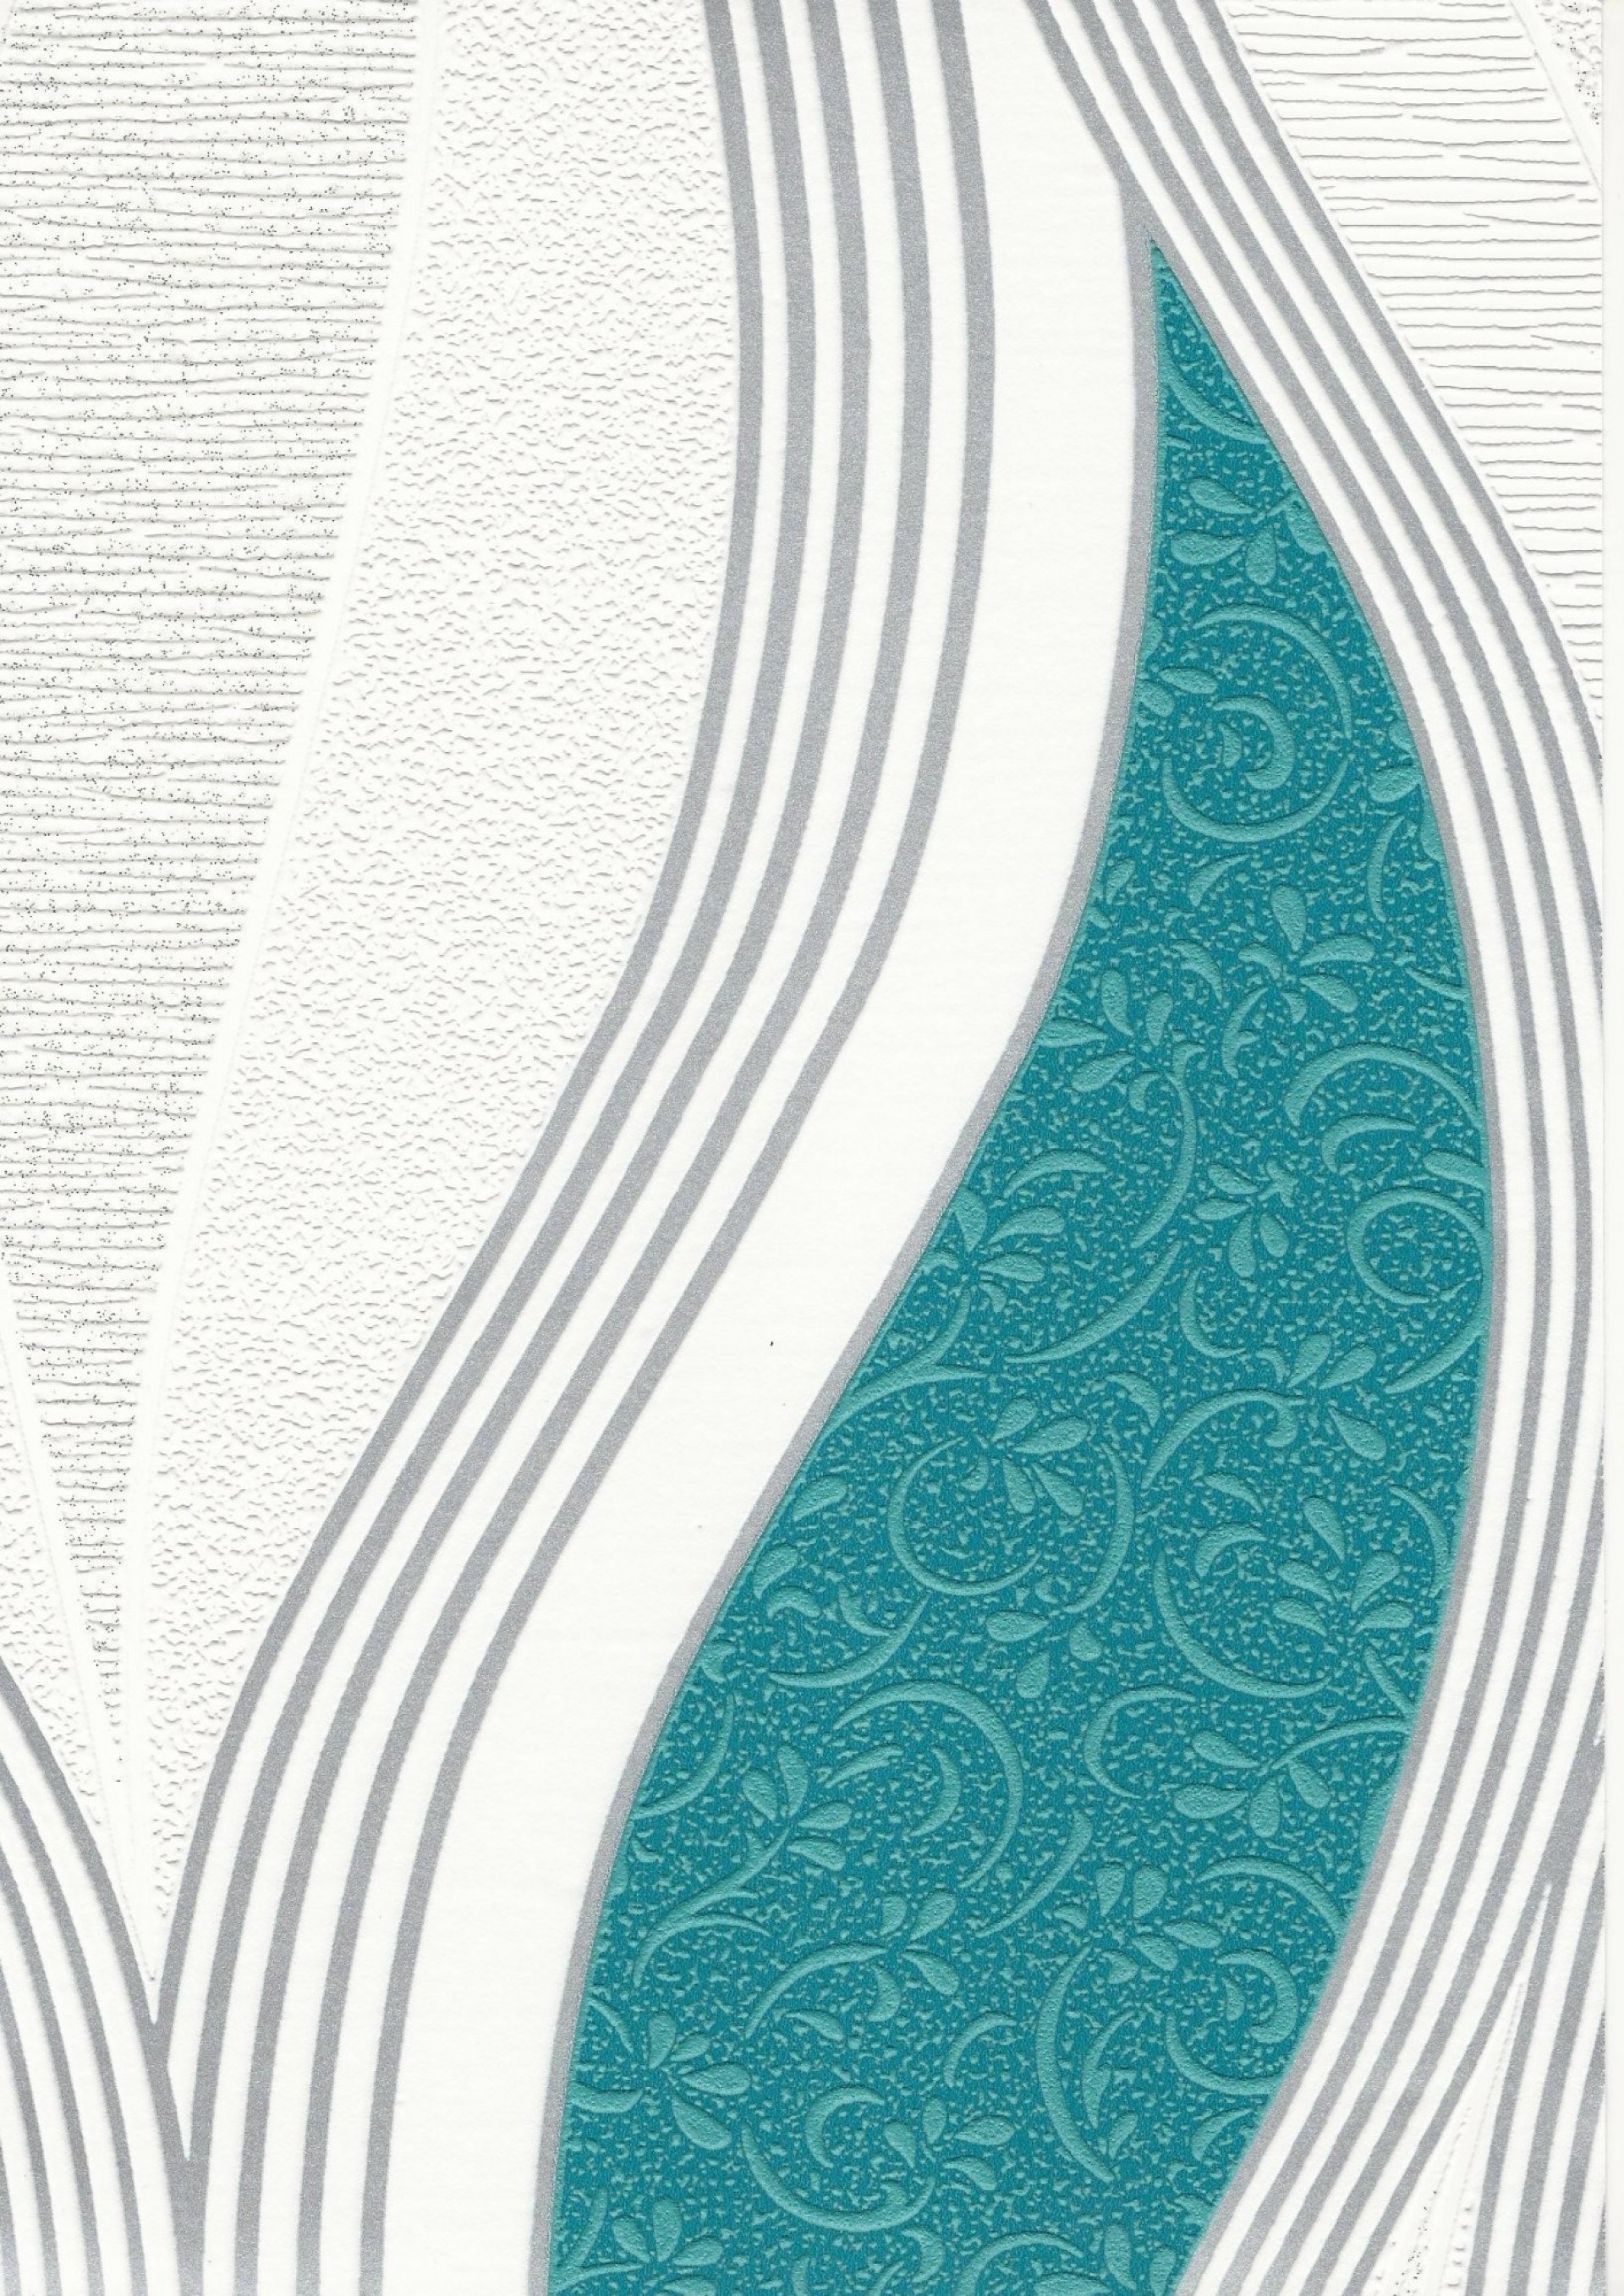 1920x2714 Metallic Waves Teal / White Textured Vinyl Wallpaper by Direct E62001